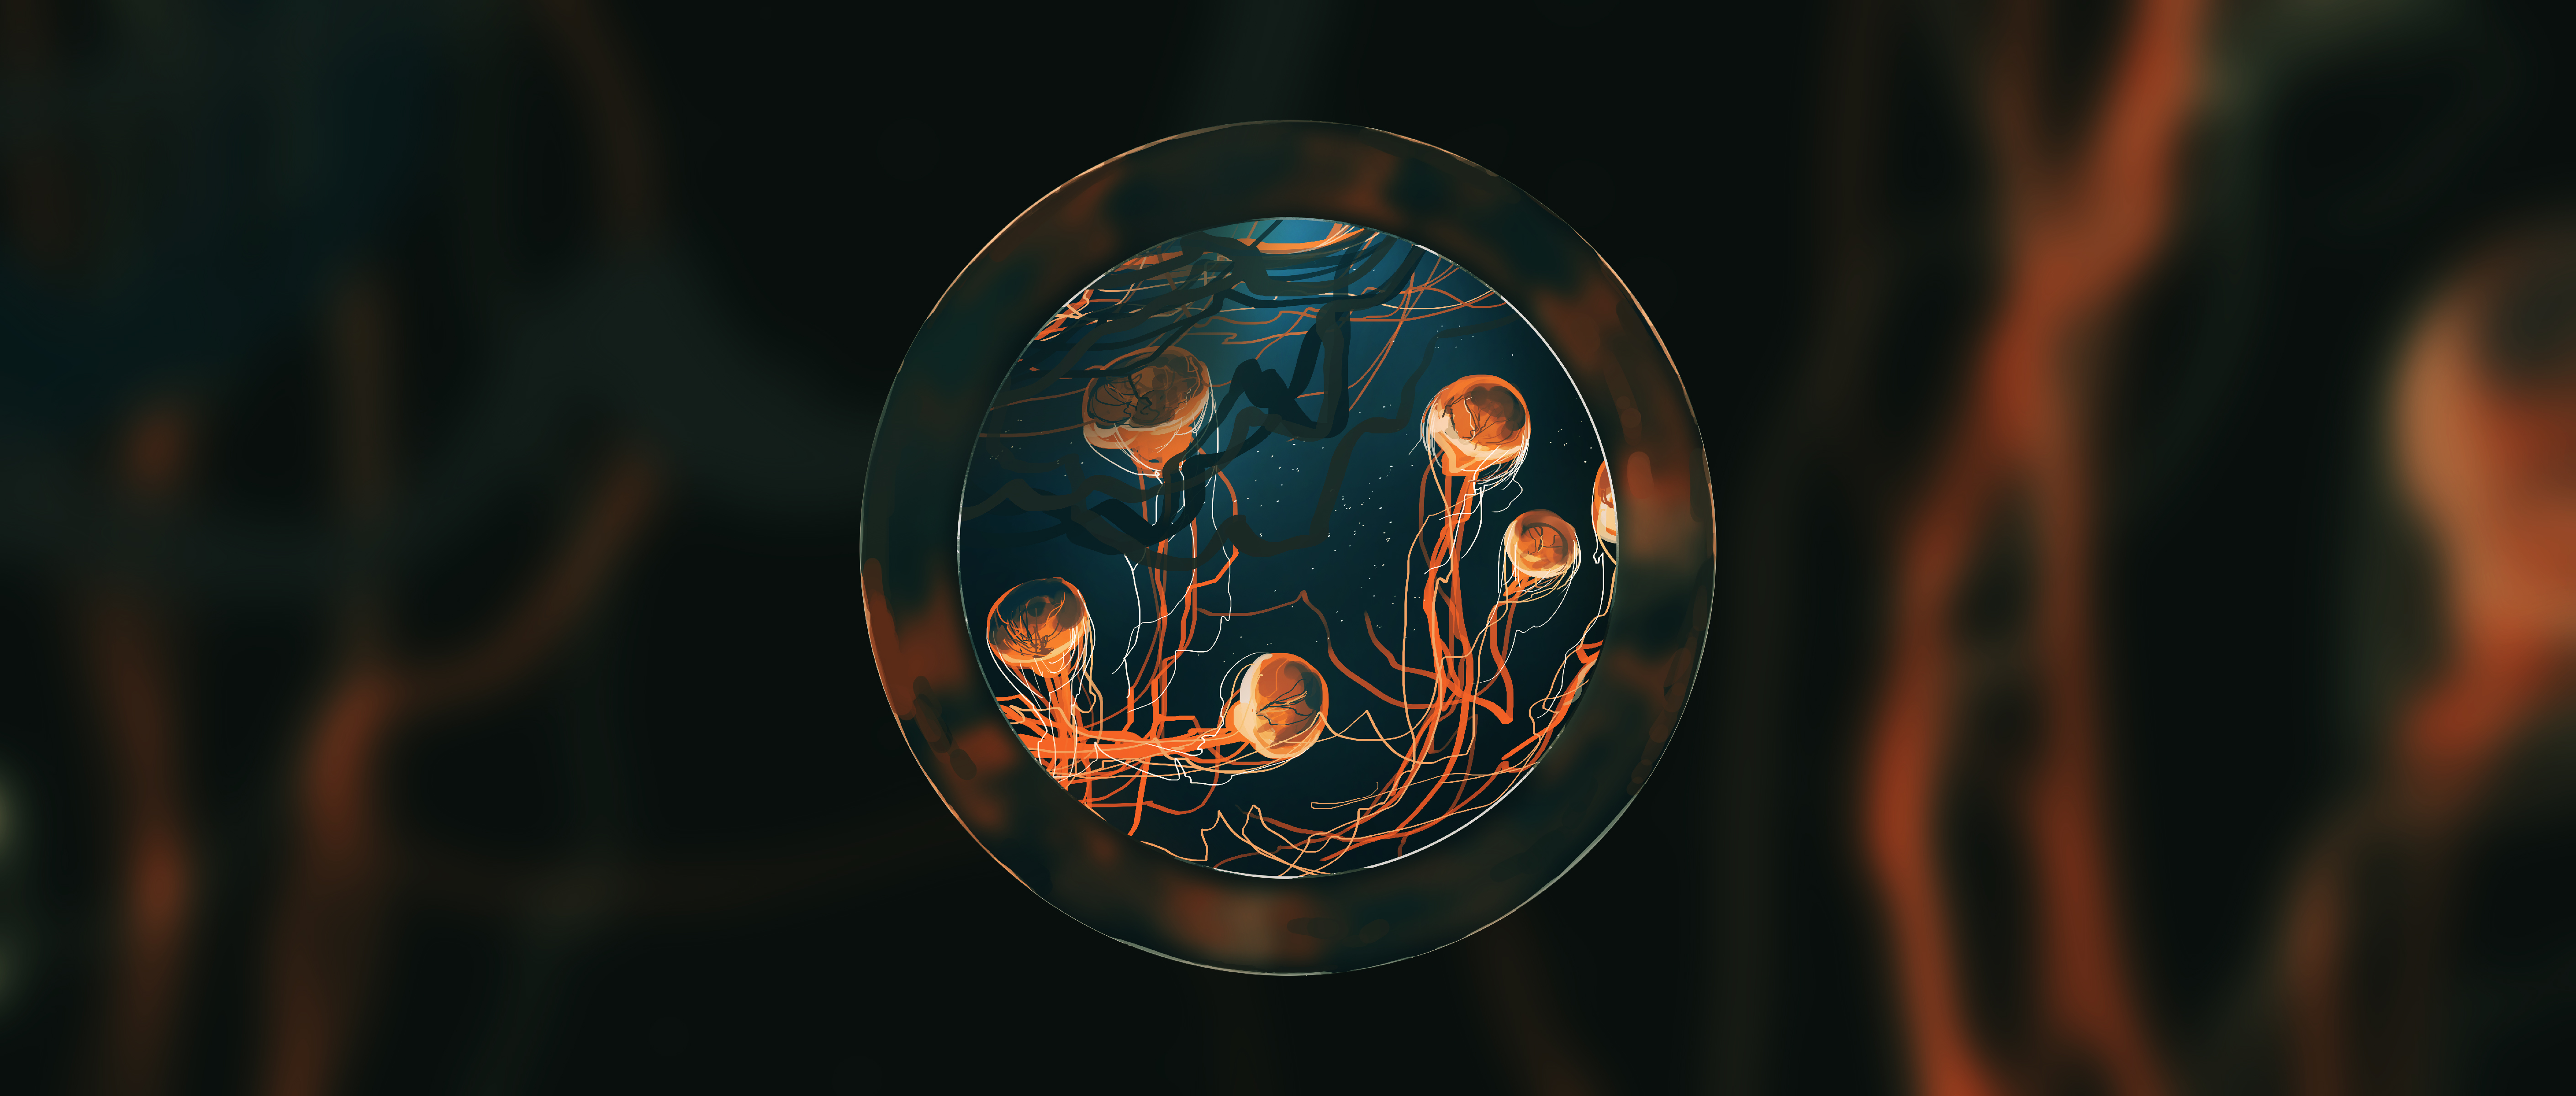 General 5640x2400 Gracile digital art artwork illustration jellyfish minimalism abstract wide screen ultrawide circle animals water